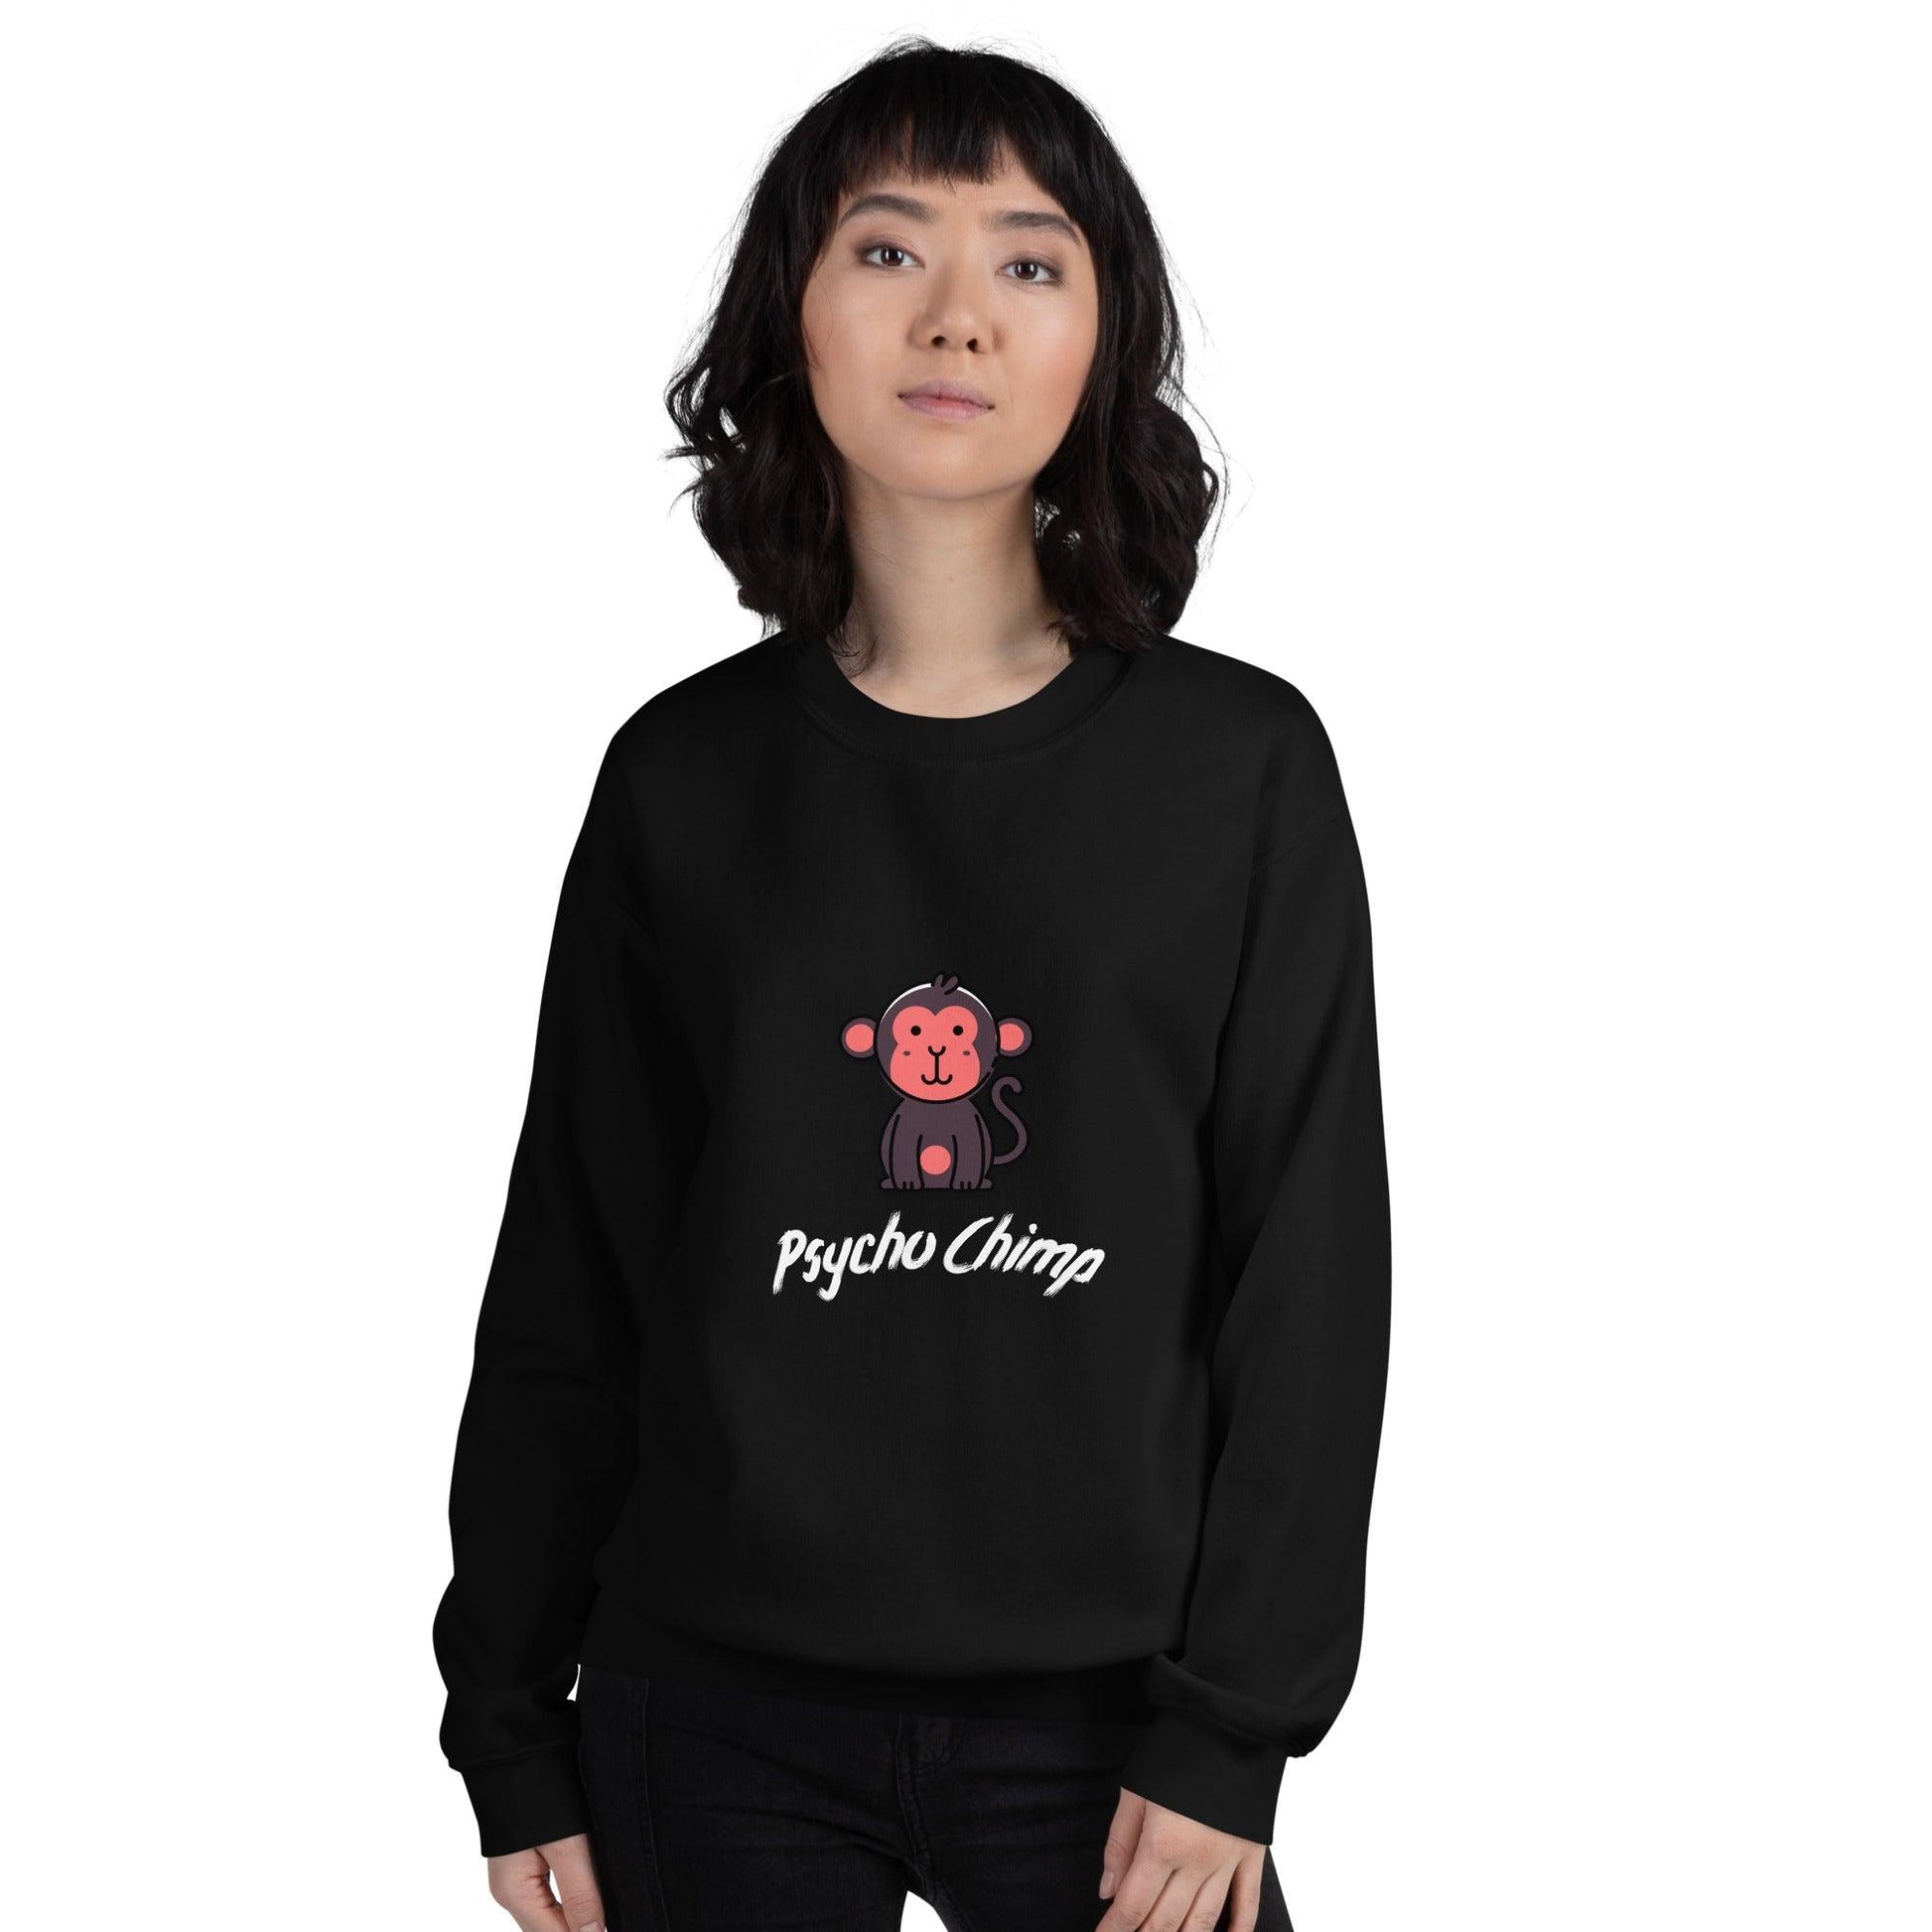 Women's Classic Fit Sweatshirt - Psycho Chimp